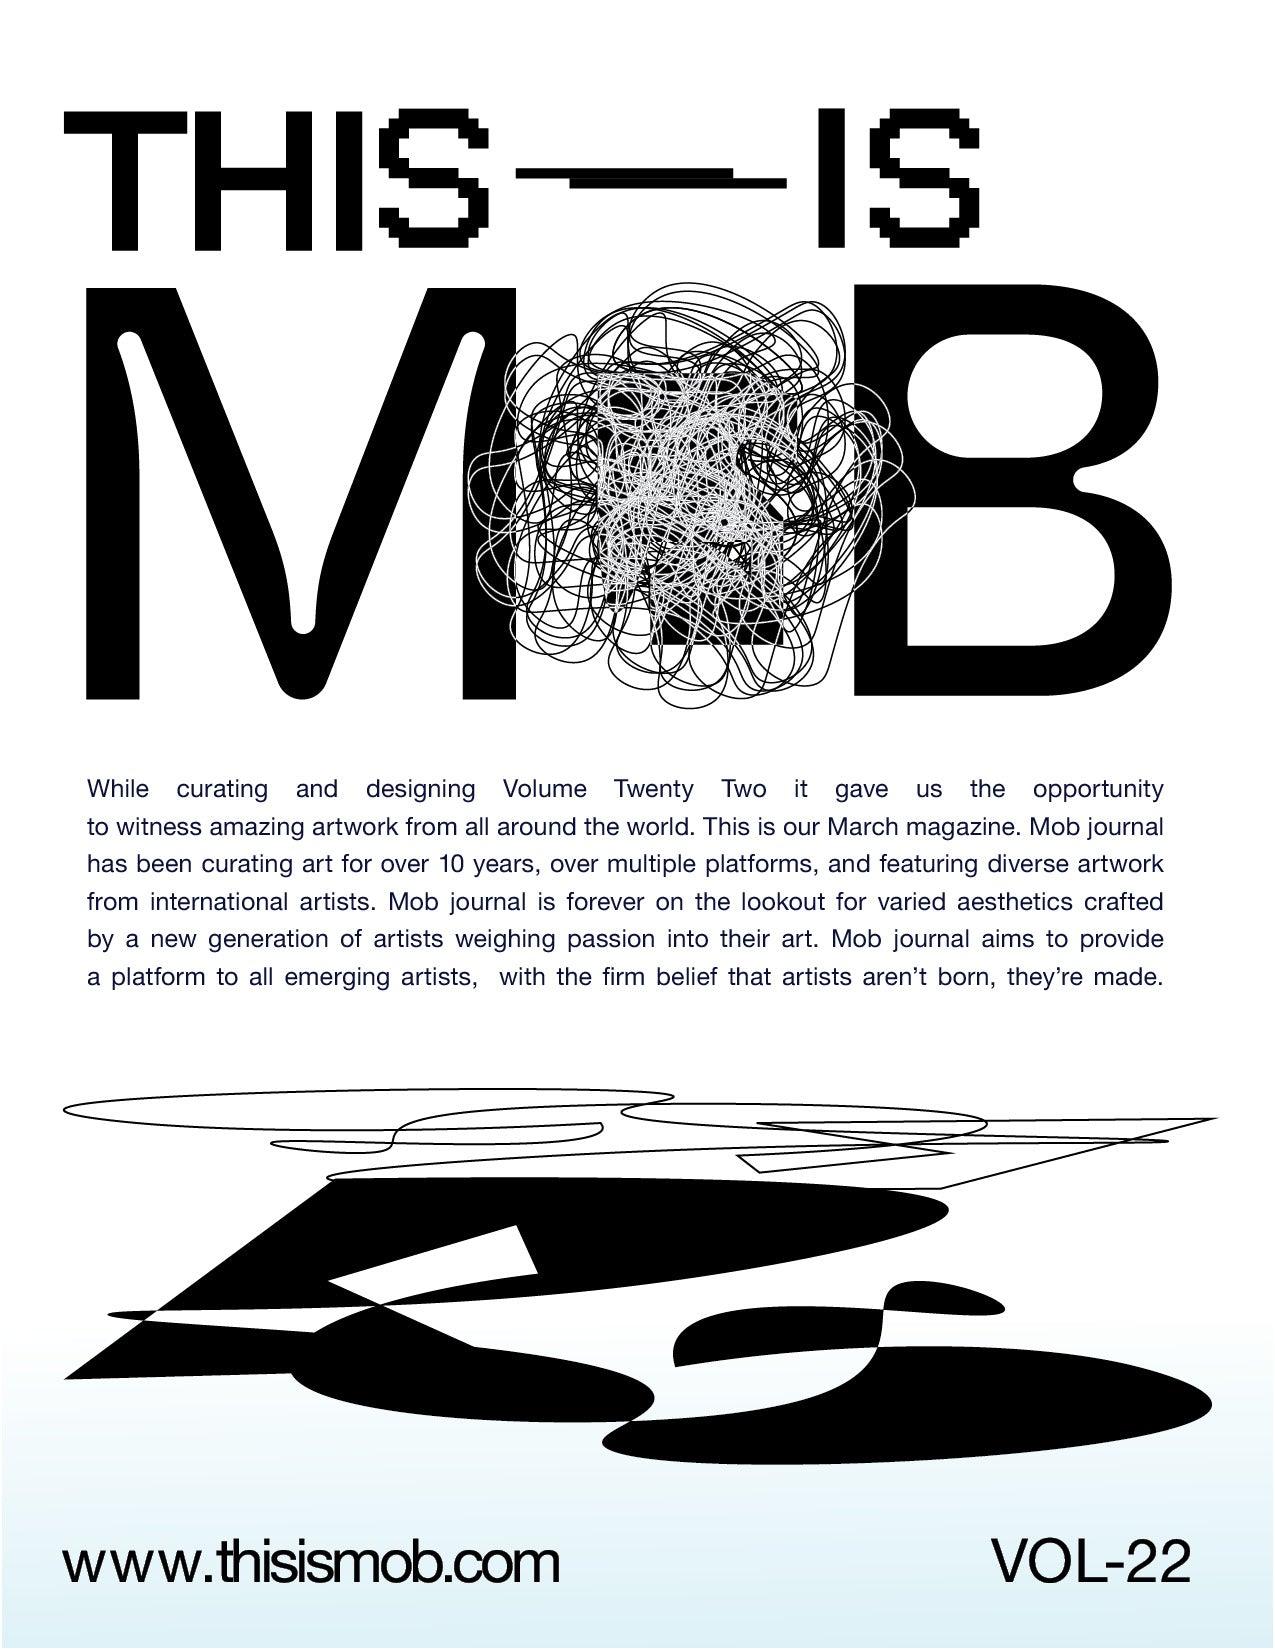 MOB JOURNAL | VOLUME TWENTY TWO | ISSUE #05 - Mob Journal